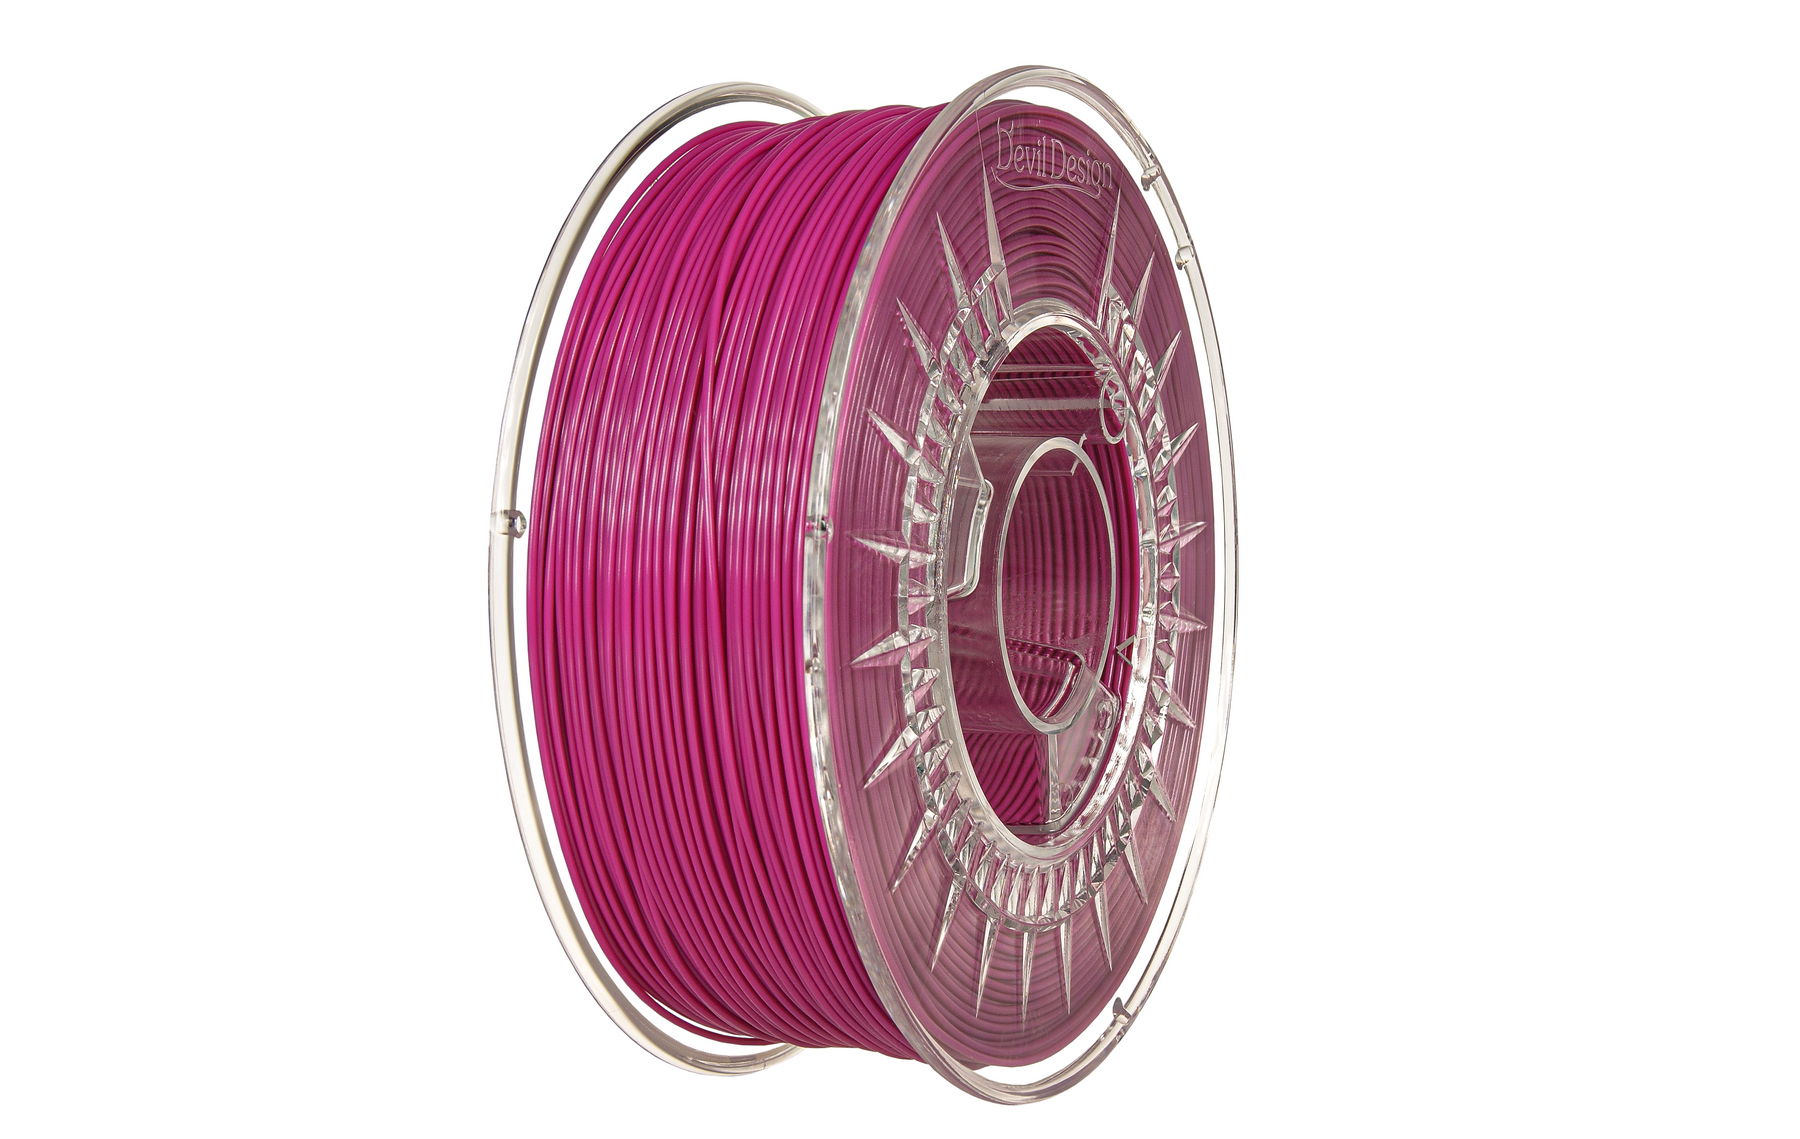 PLA-Filament | 1,75 mm | 1 kg | DEVIL DESIGN 3D Druck Filament